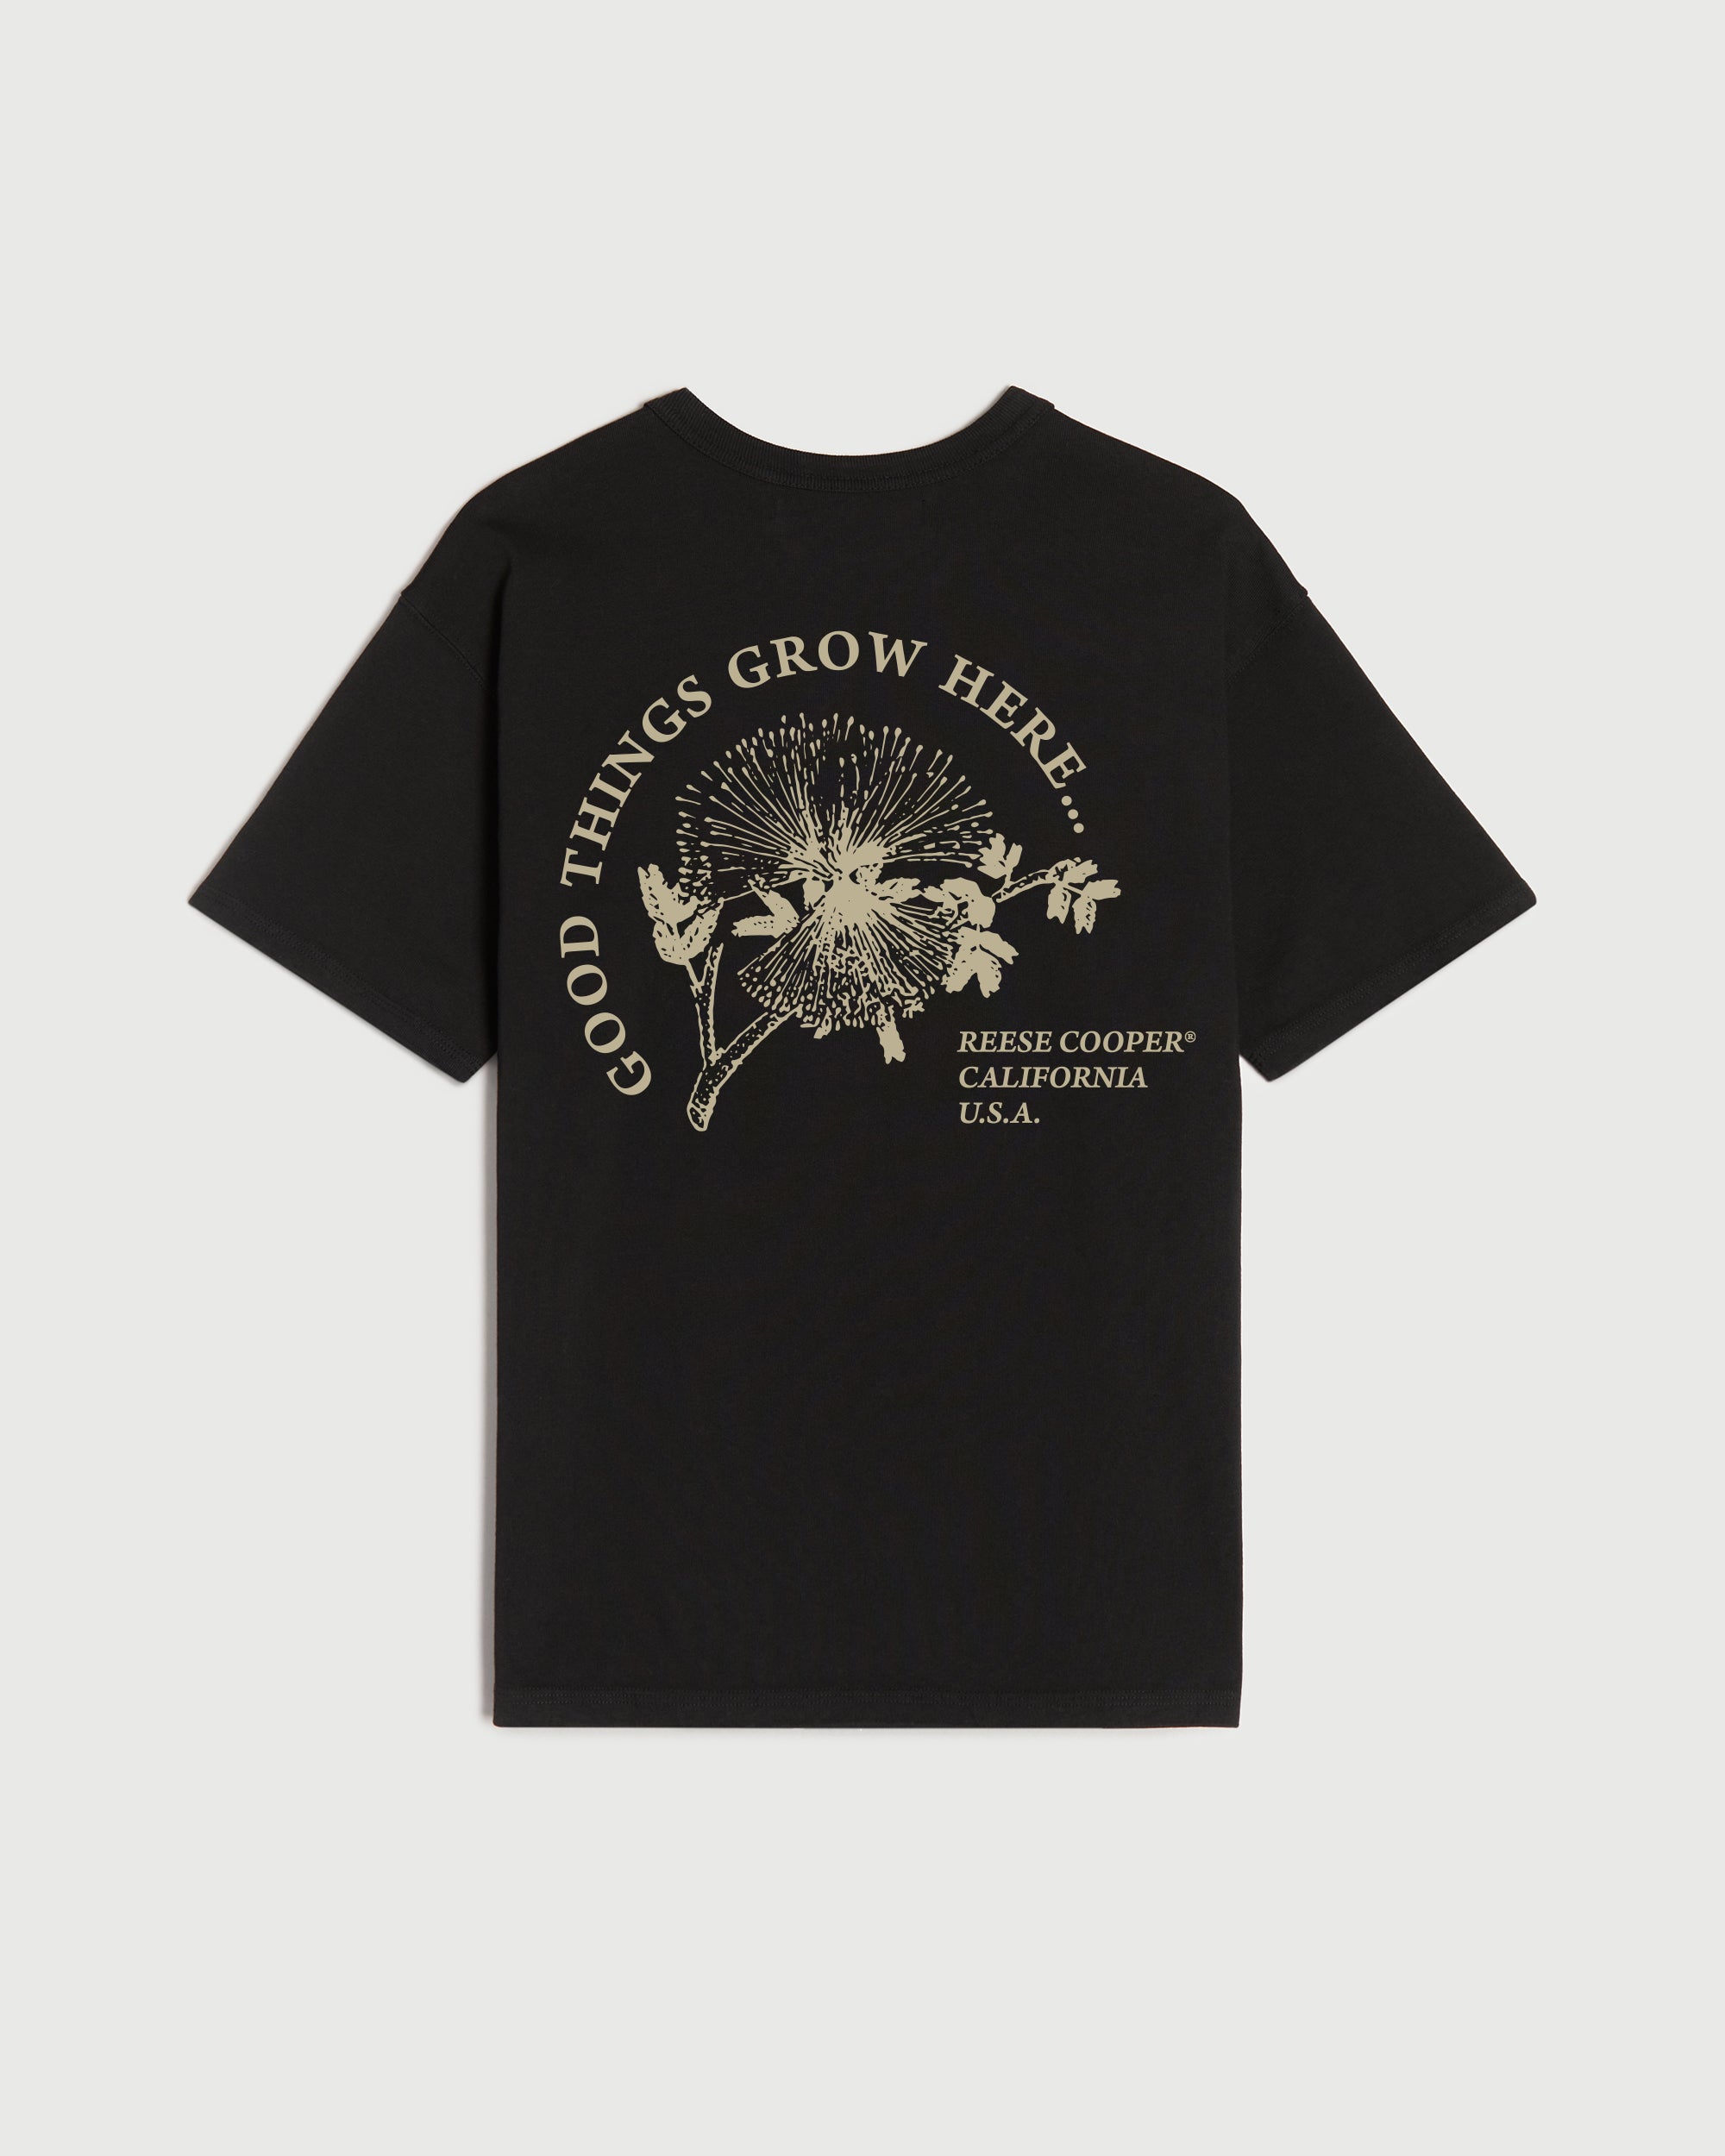 Gardening T-Shirt in Black